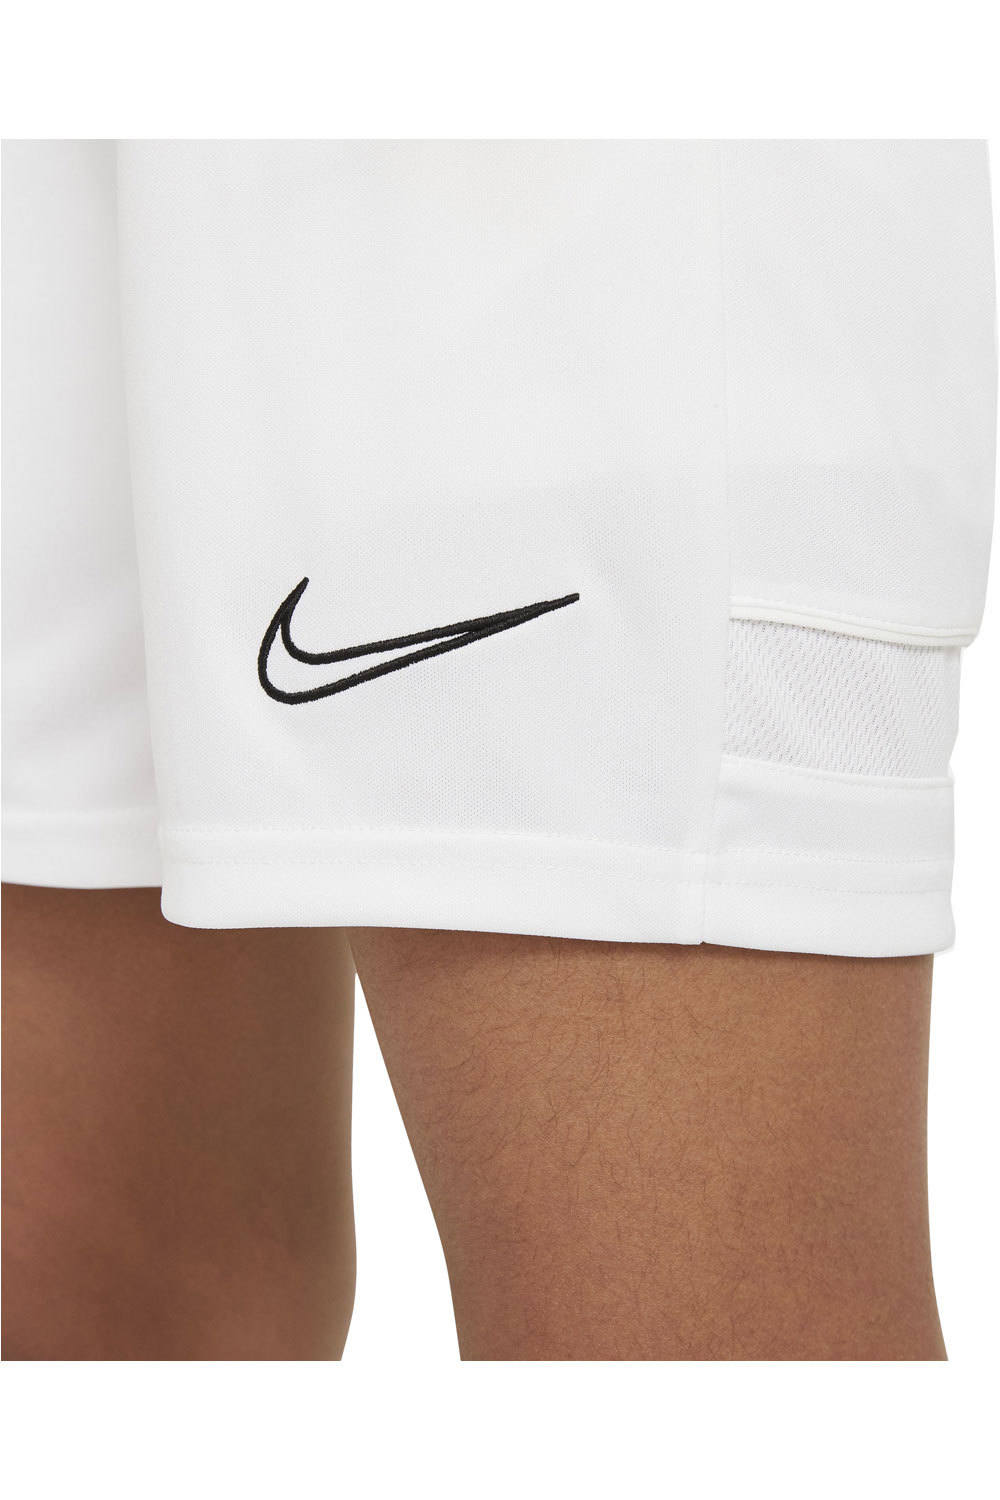 Nike pantalones cortos futbol niño ACADEMY 21 SHORT vista detalle